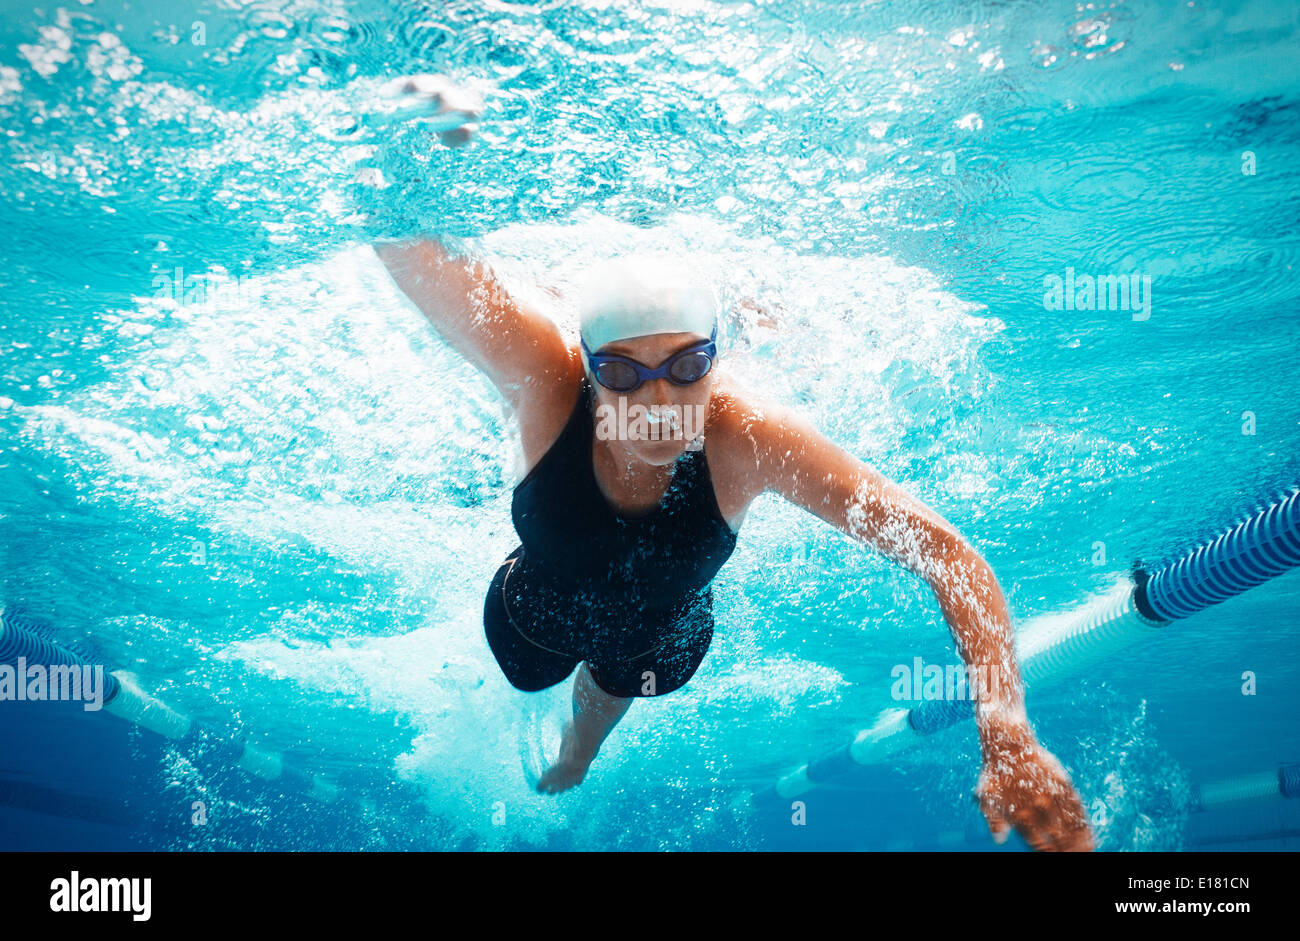 Swimmer racing in pool Stock Photo